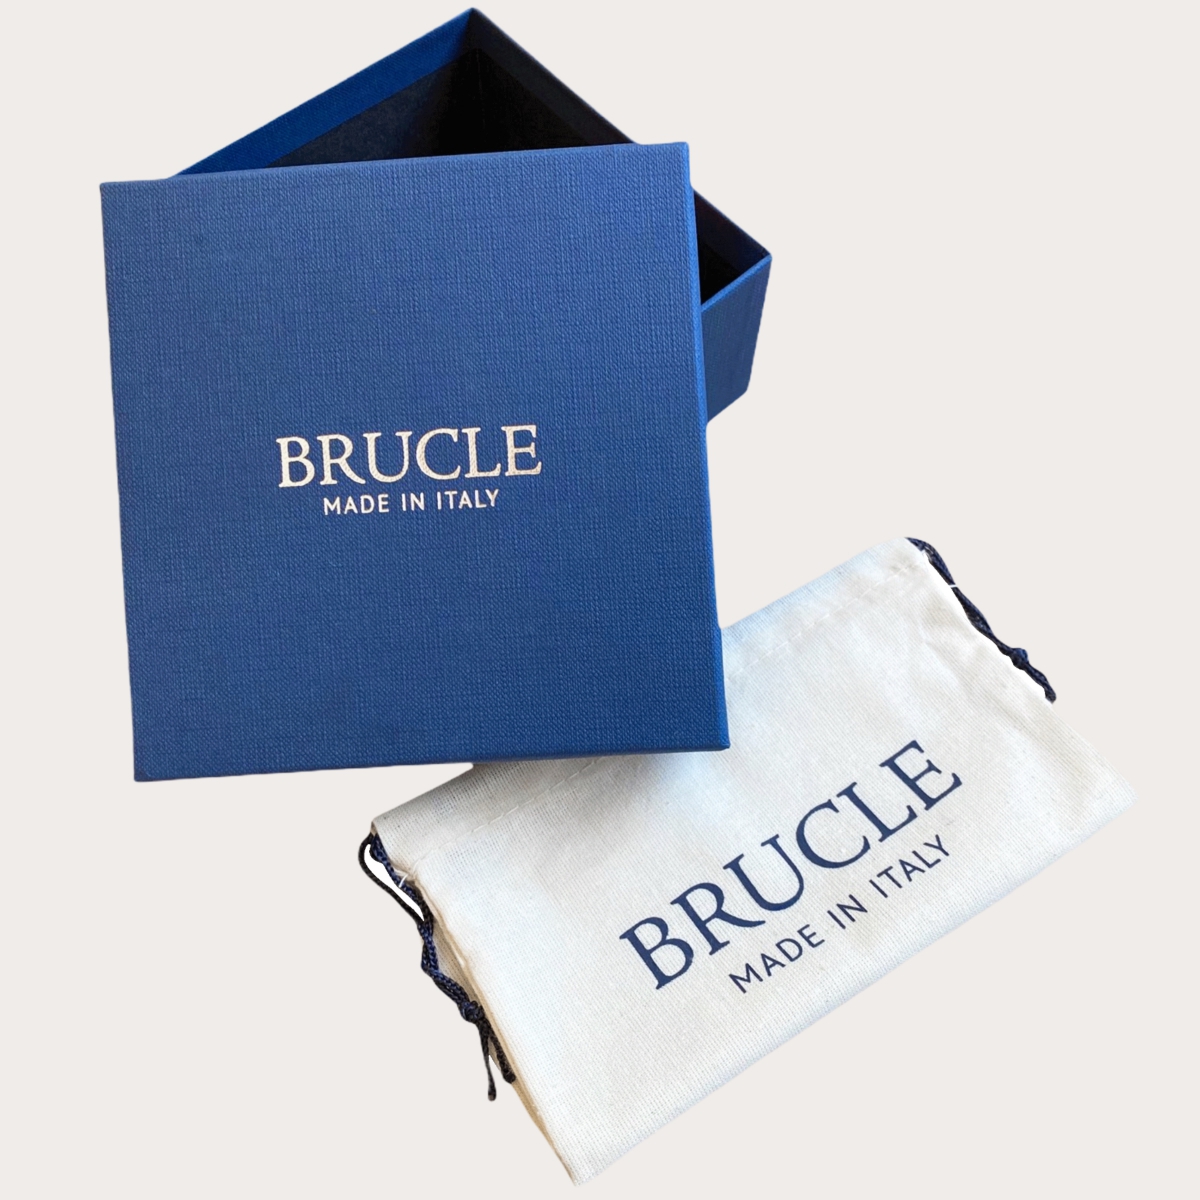 BRUCLE Alligator belt with nickel free buckle, light blue